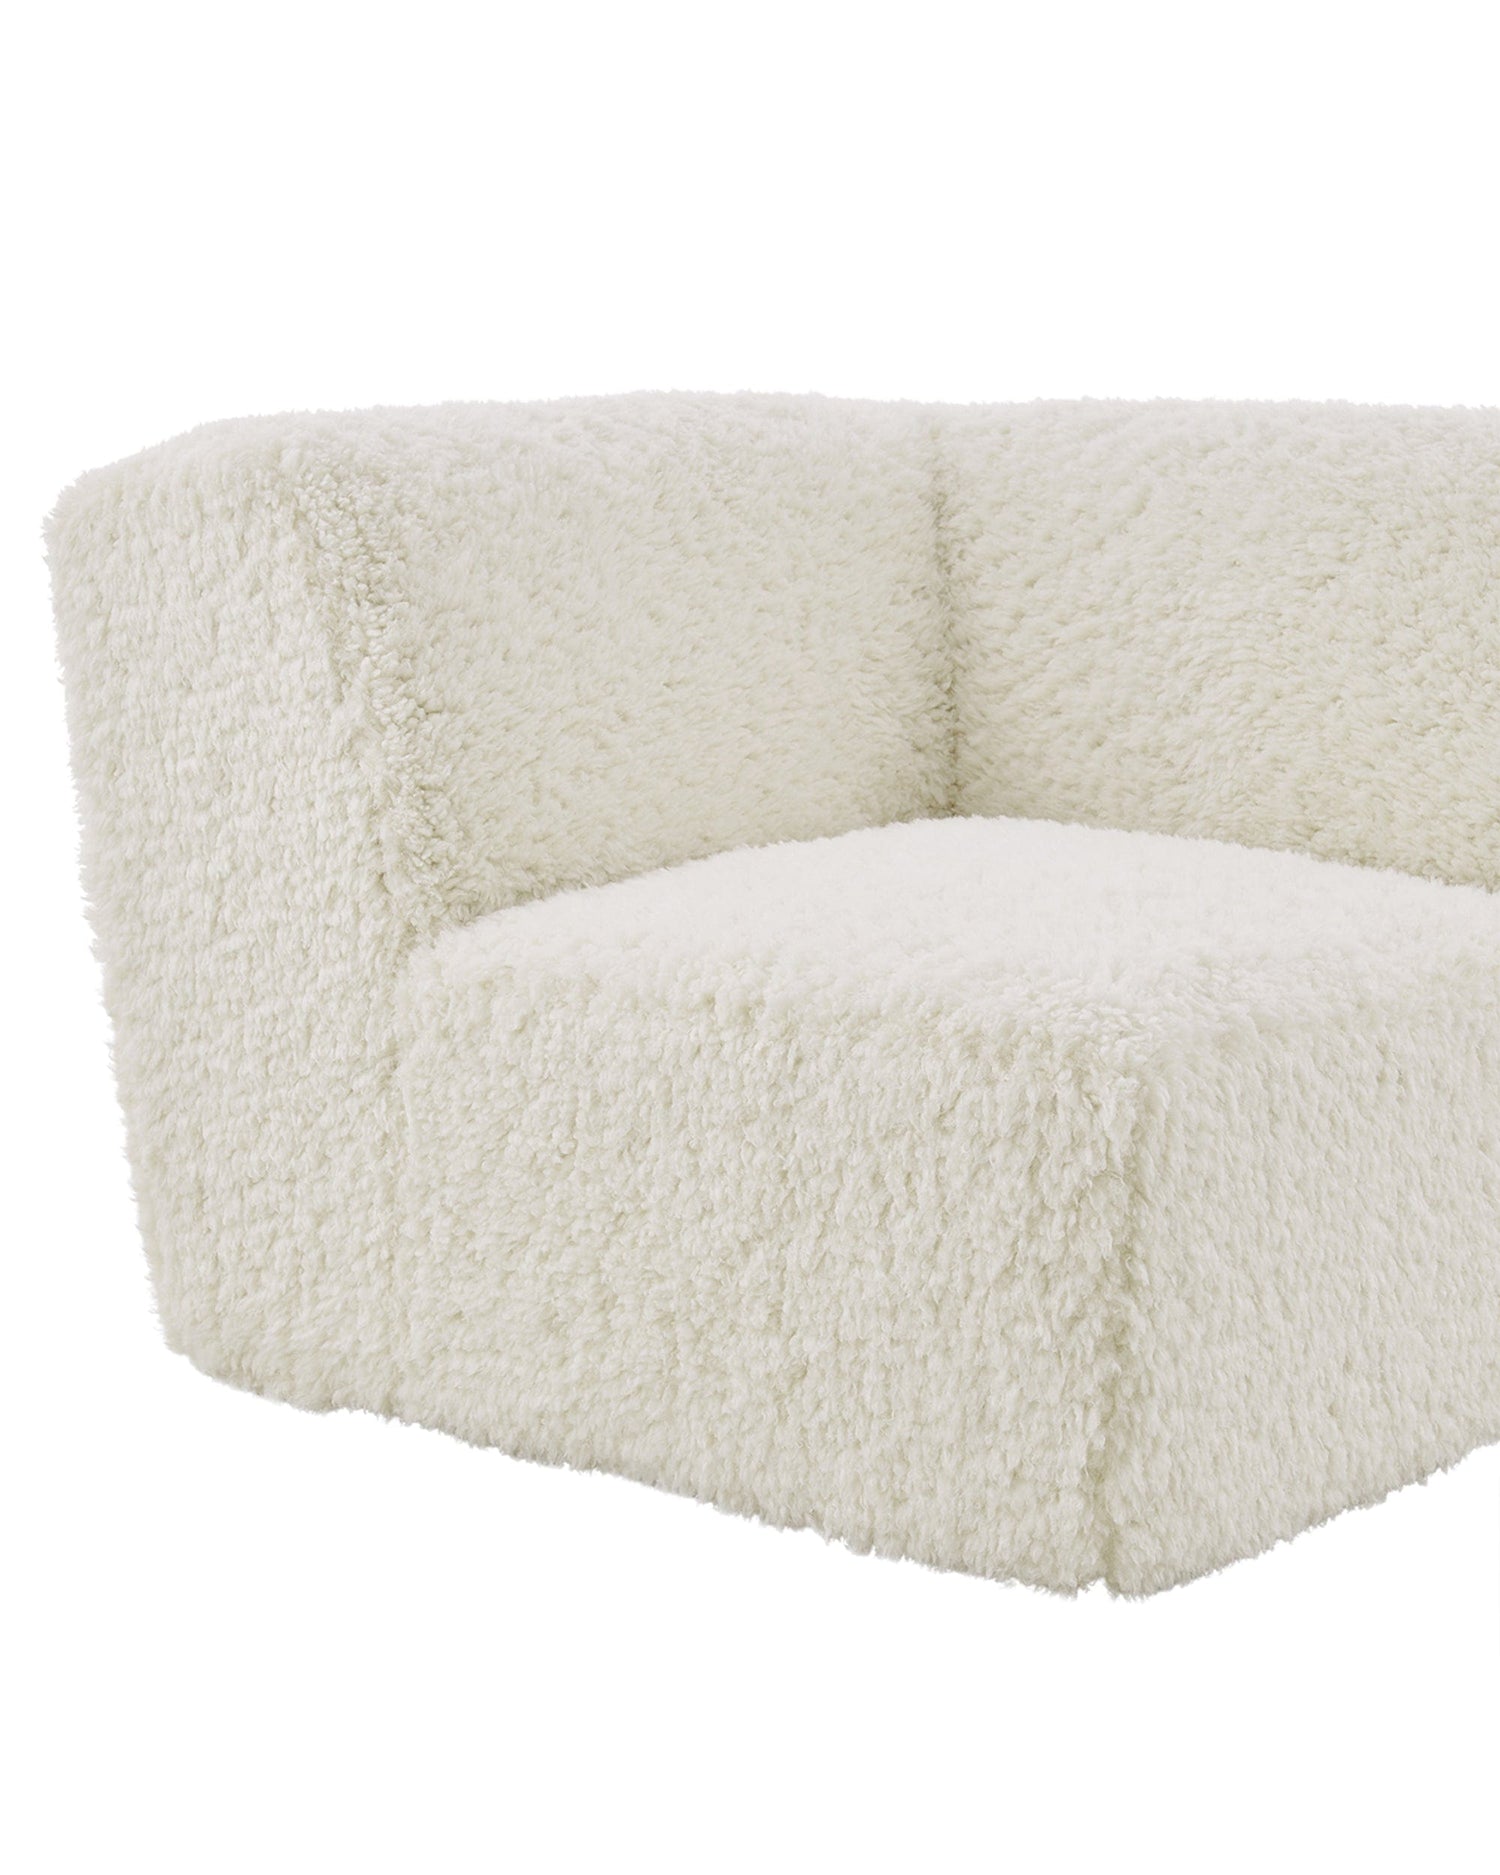 Eternity Modern Yeti Sheepskin Low Profile Sectional Sofa